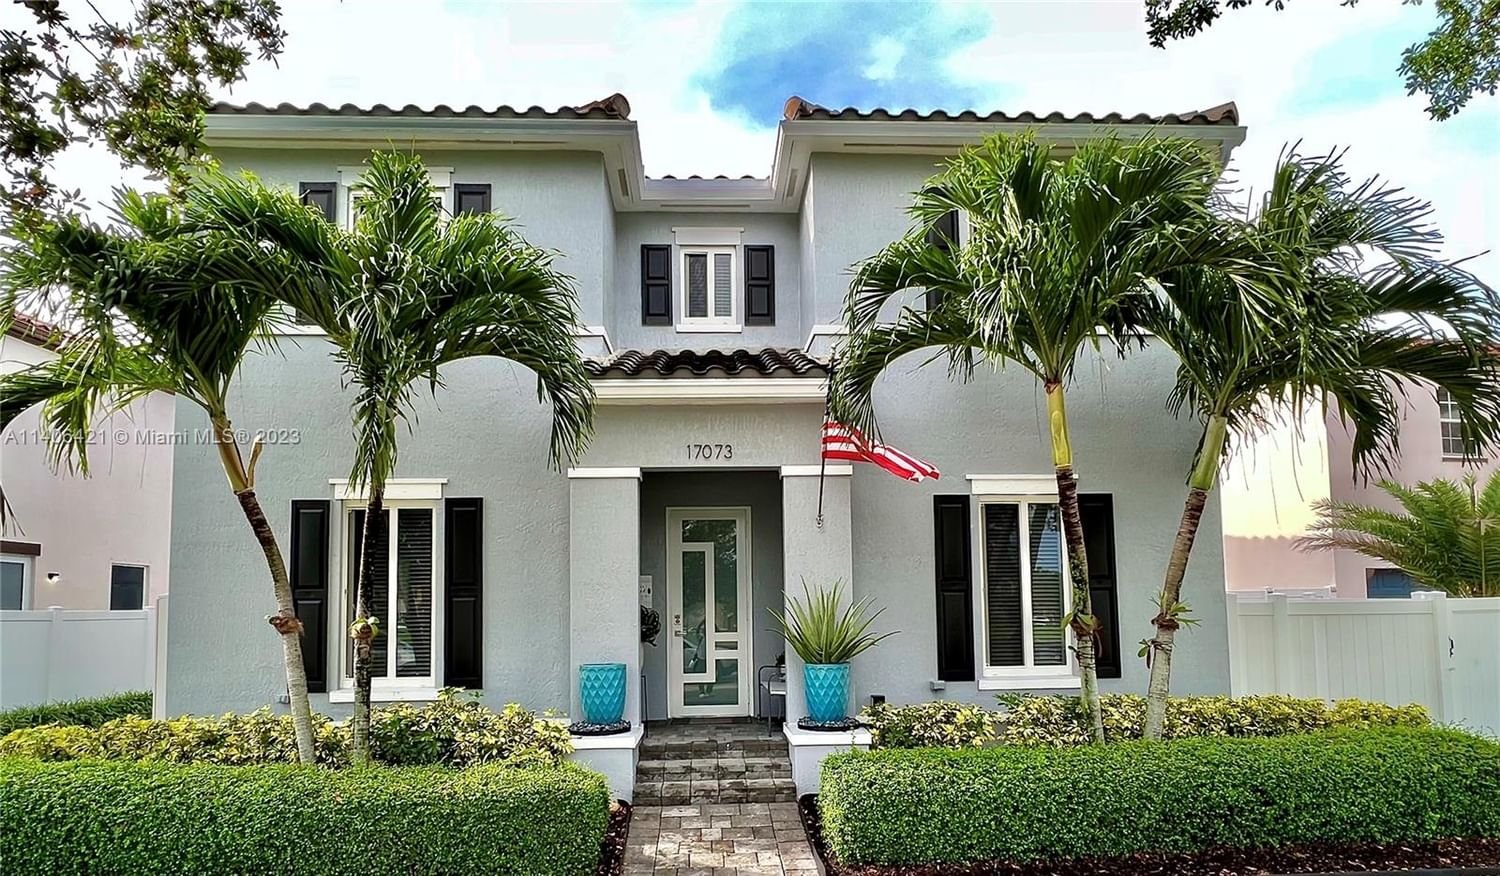 Real estate property located at 17073 94th Way, Miami-Dade County, Miami, FL